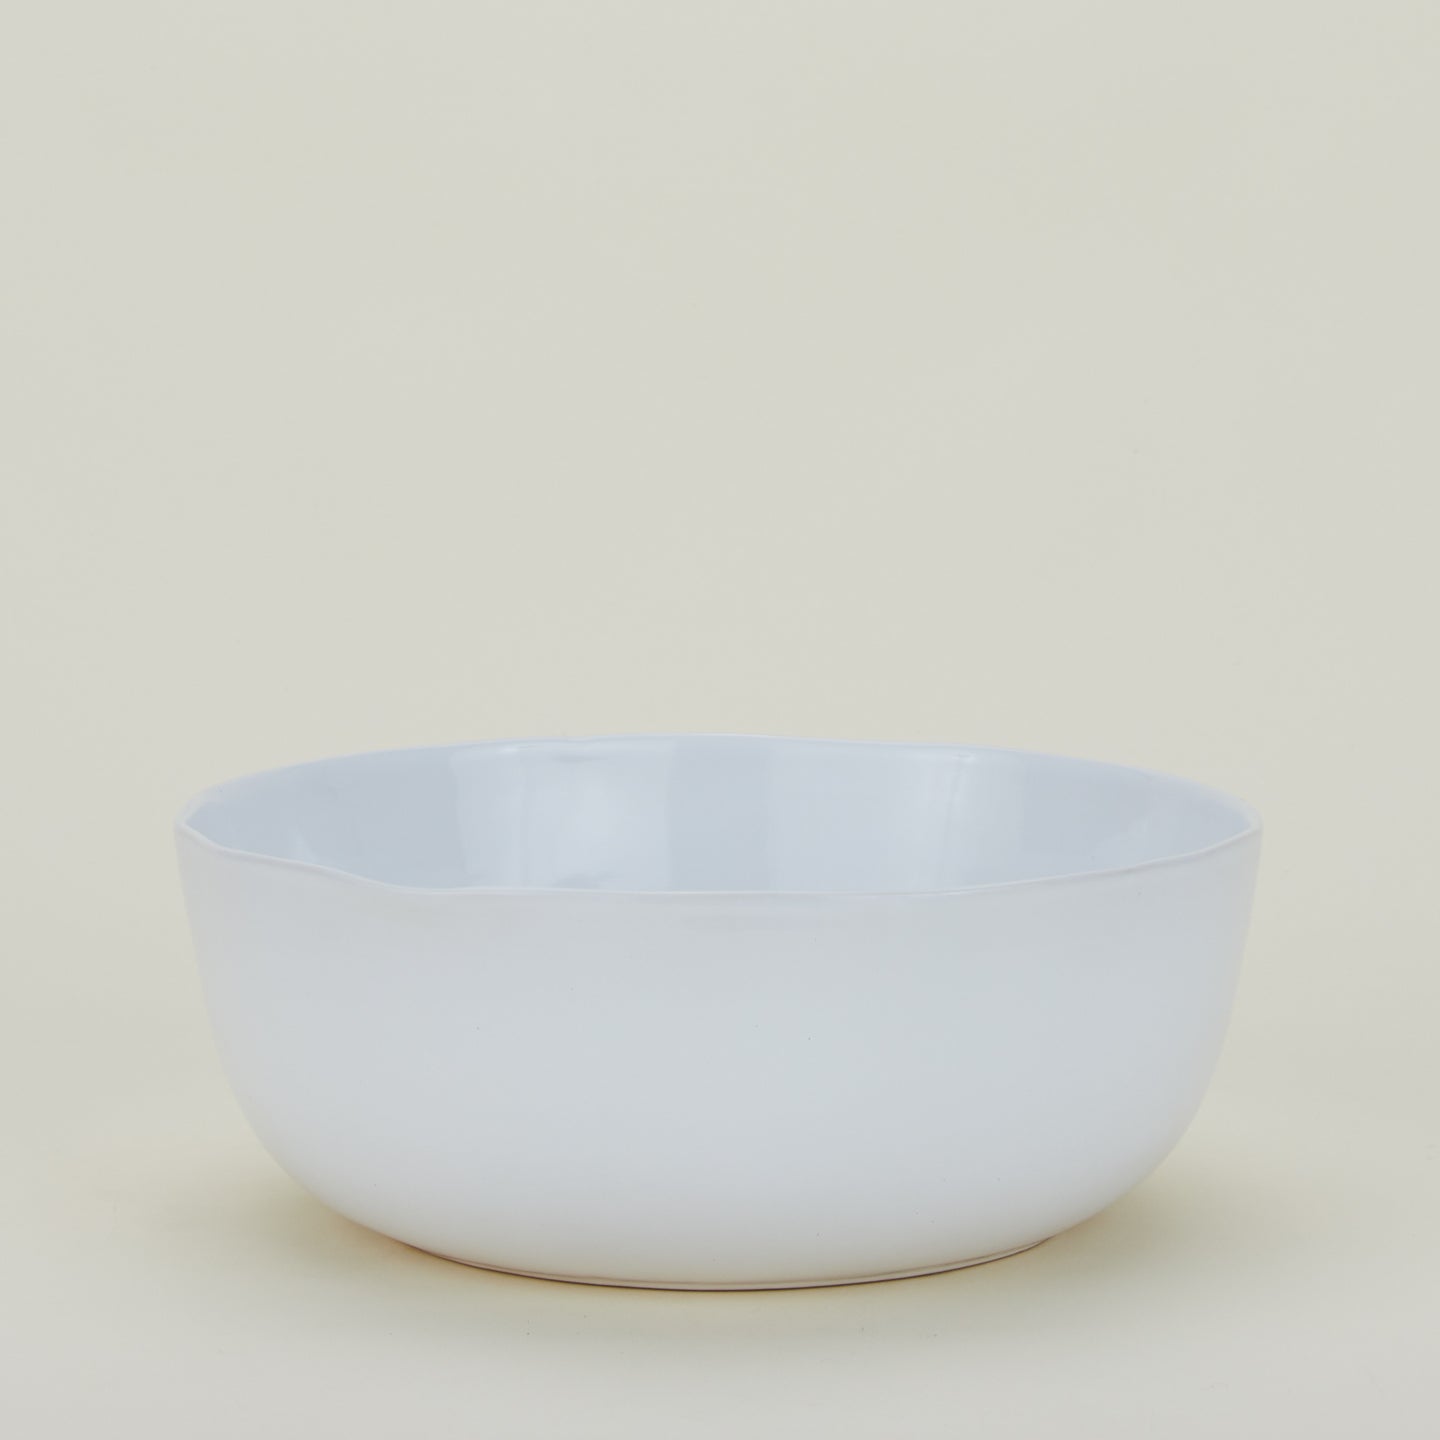 White Strata Serving Bowl in Medium size.